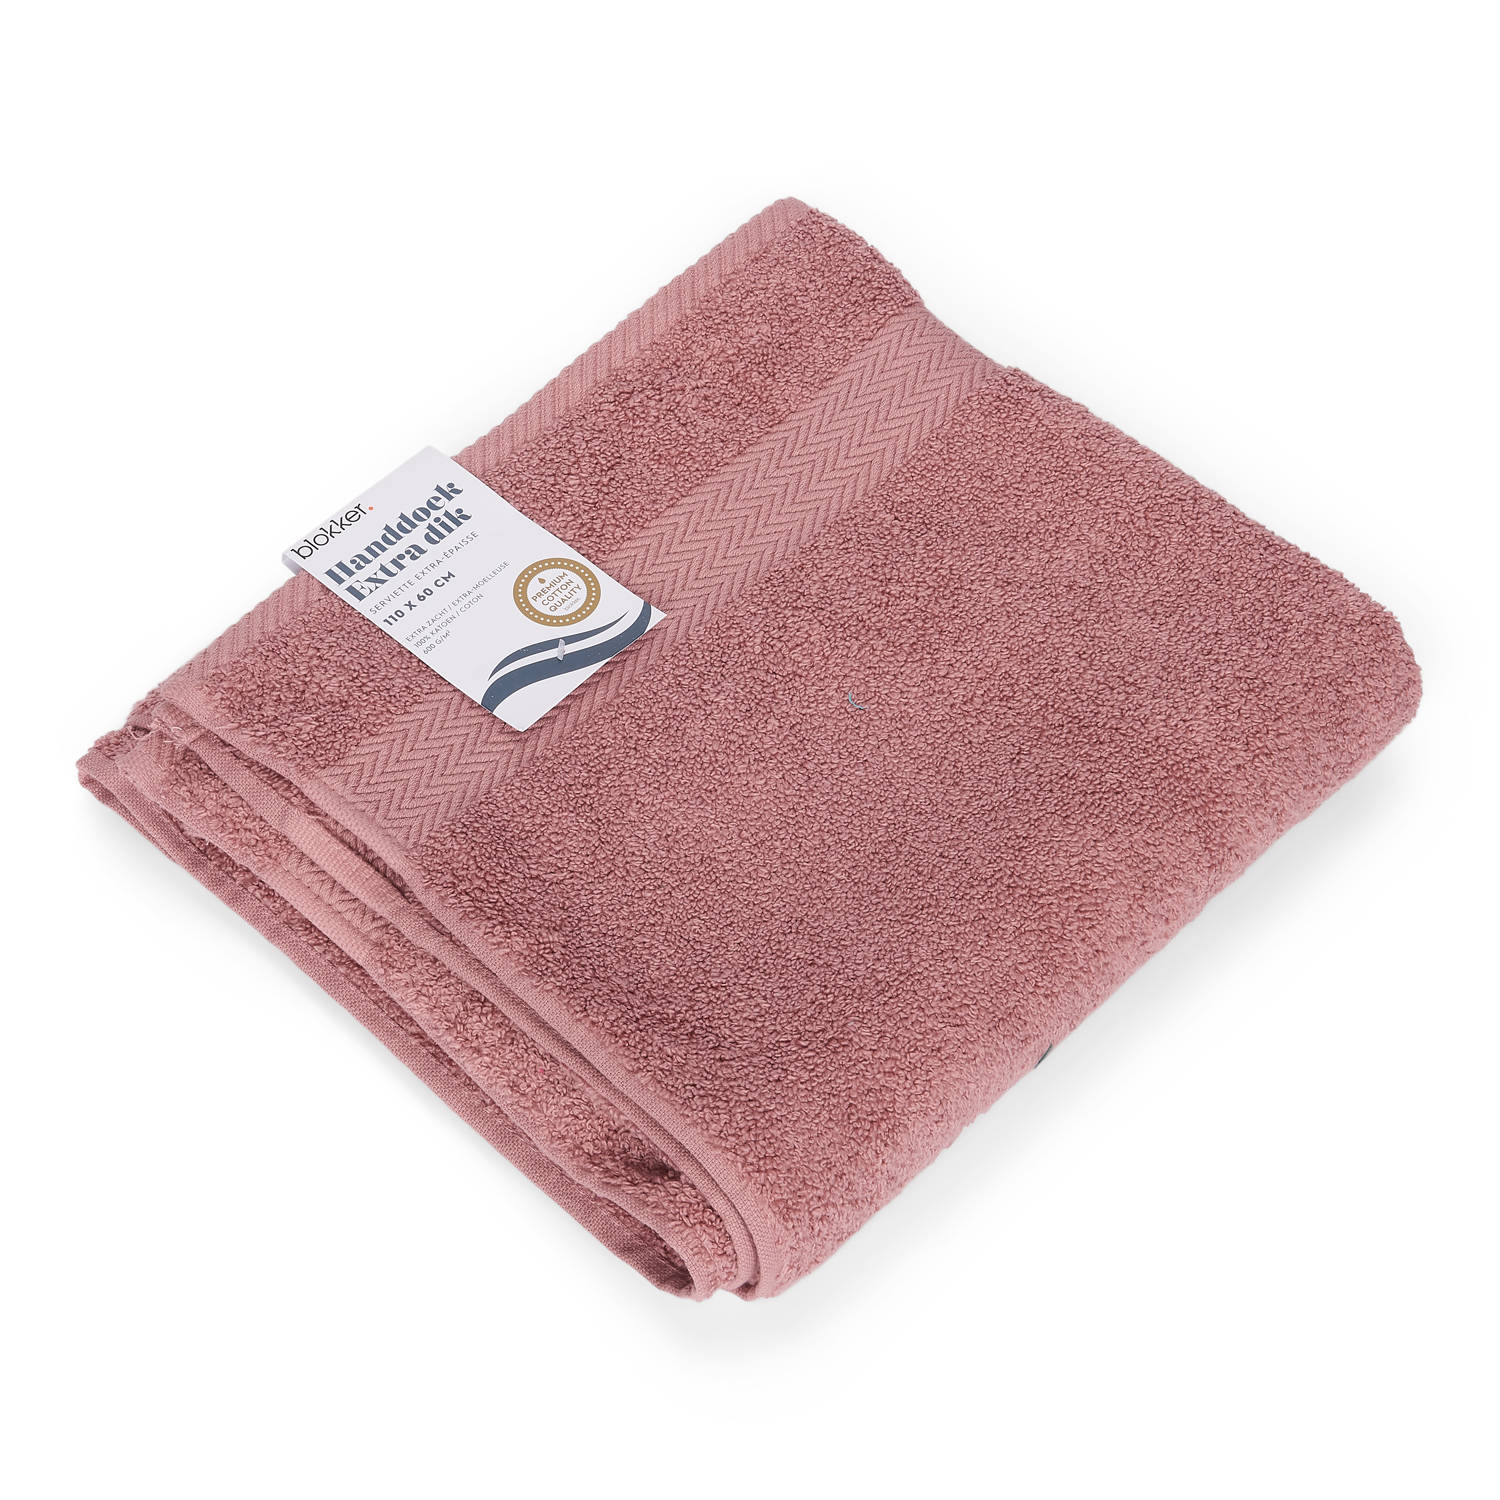 Loodgieter vrijgesteld Hobart Blokker handdoek 600g - roze 110x60 cm | Blokker